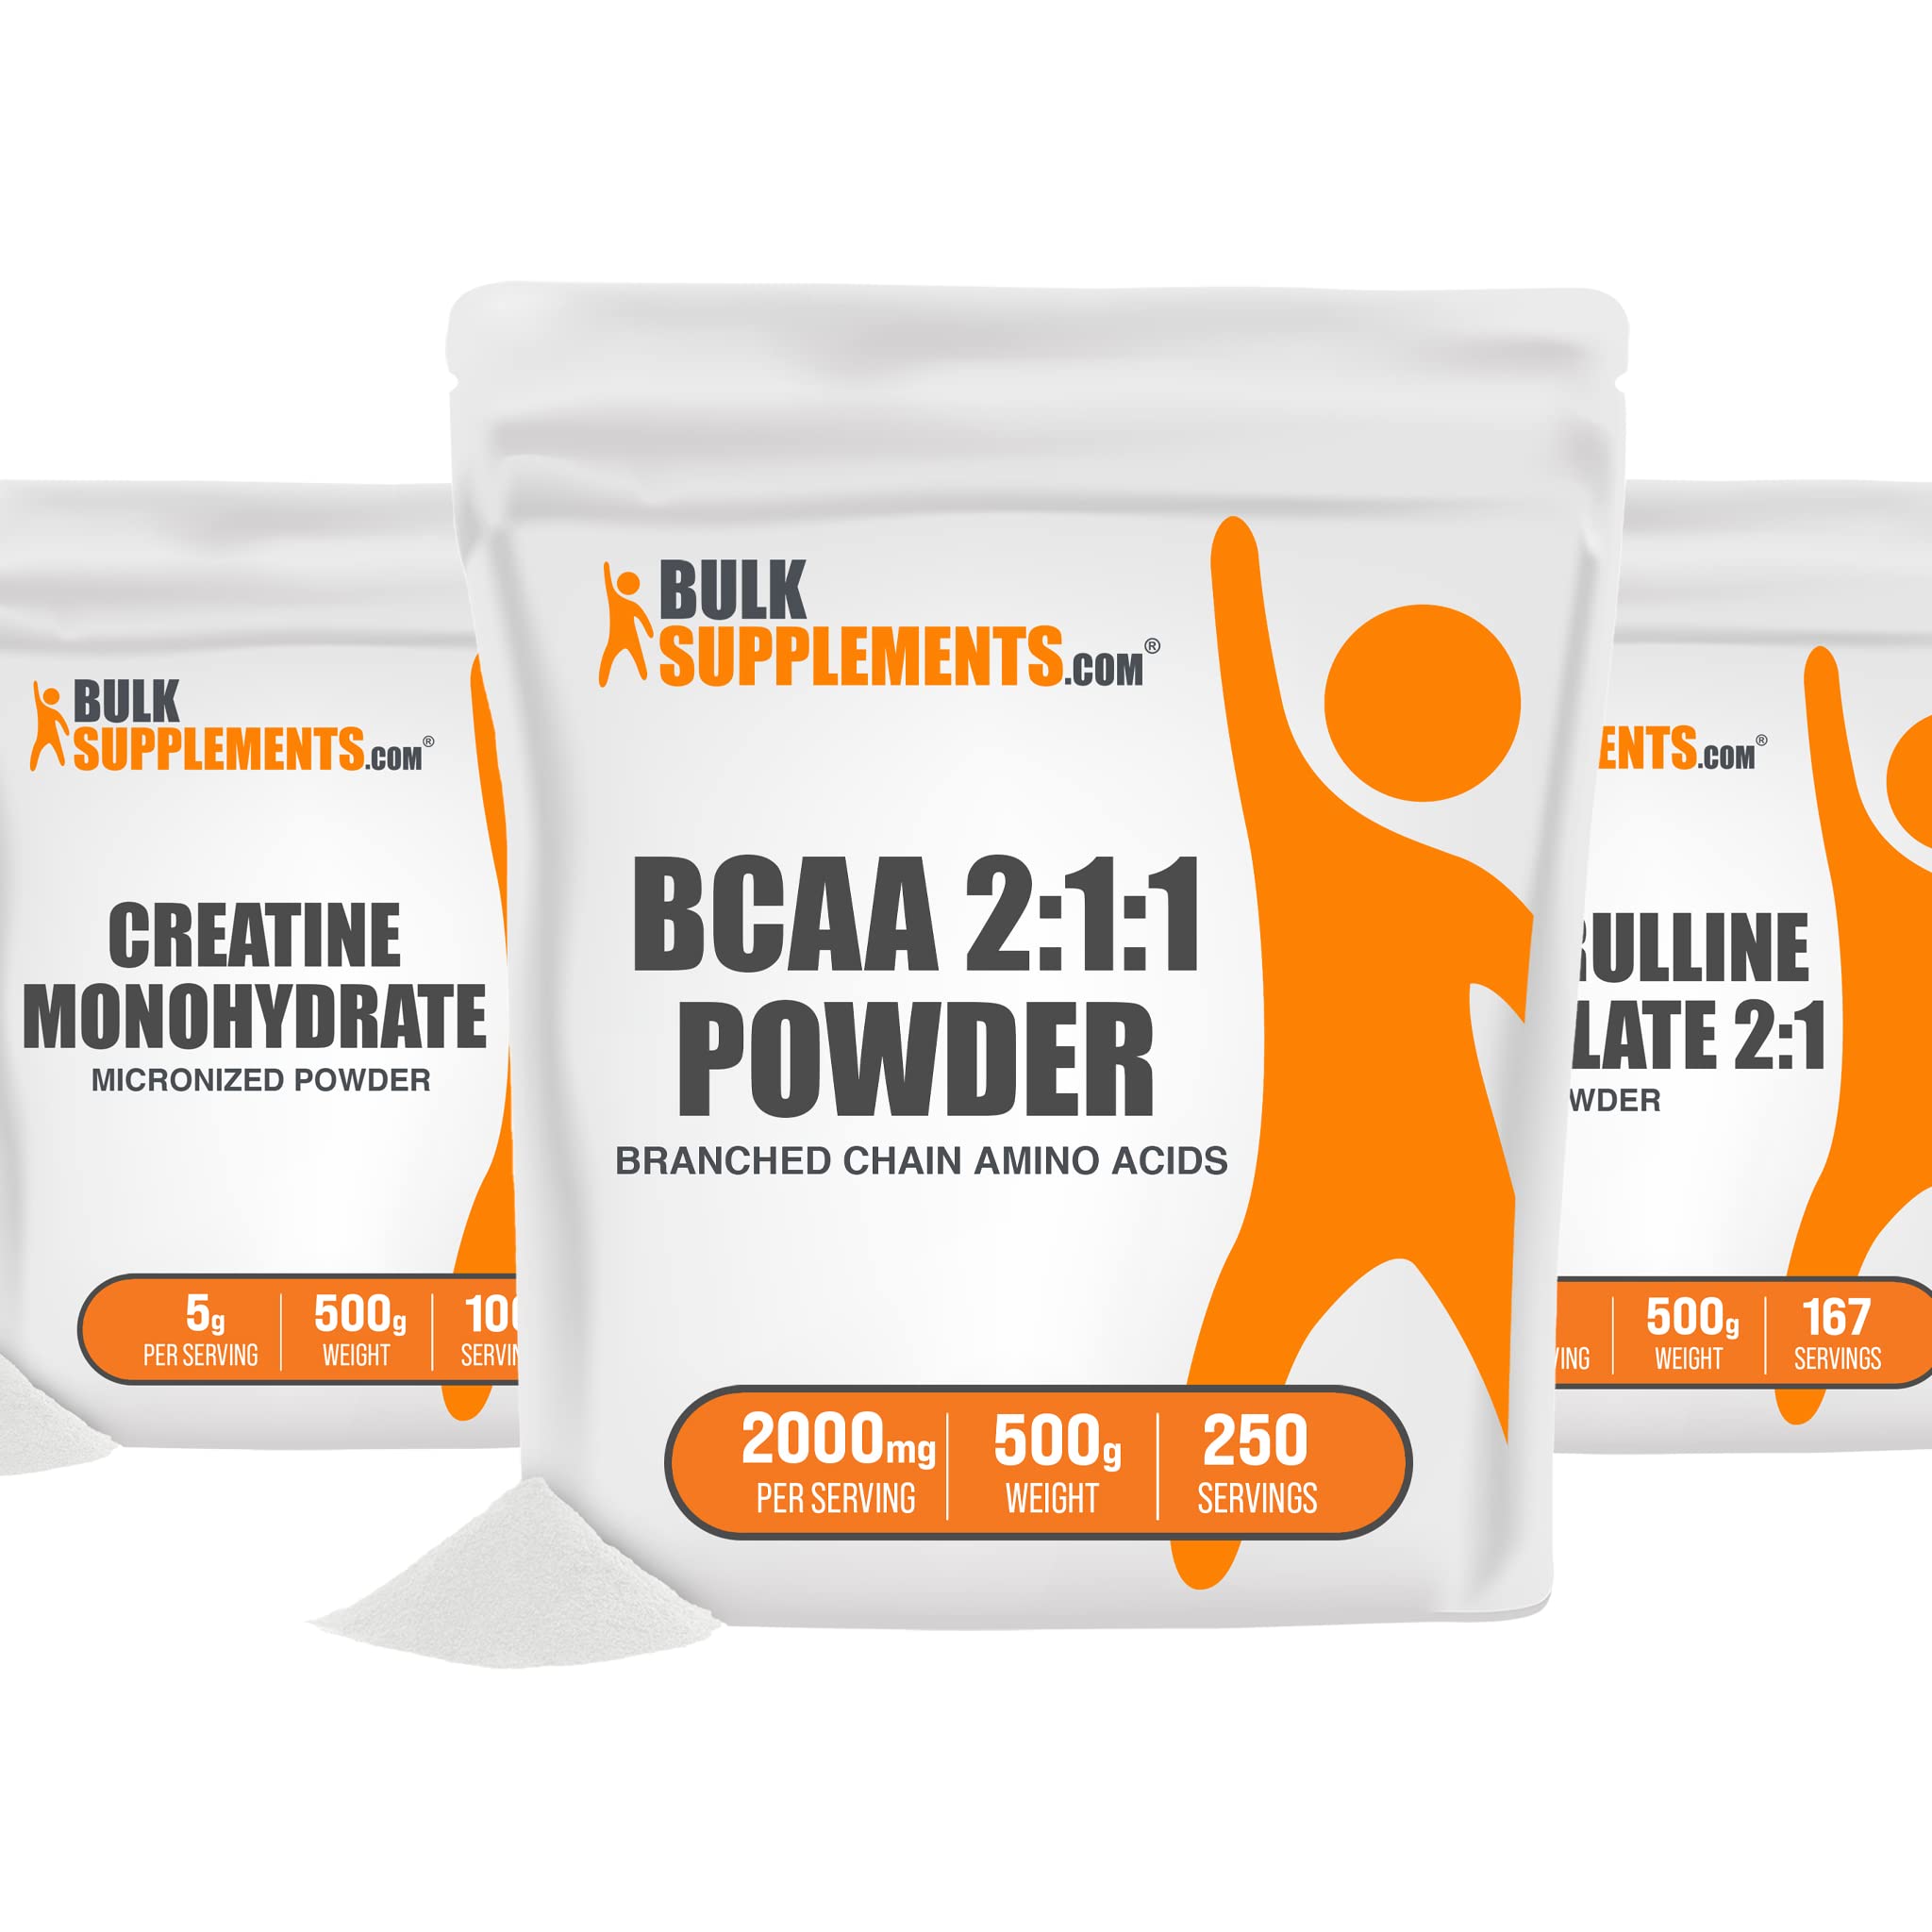 BULKSUPPLEMENTS.COM BCAA 2:1:1 Powder (Branched Amino Acids) 500g, with Creatine Monohydrate Powder (Micronized) 500g, & L-Citrulline Malate 2:1 Powder 500g Bundle